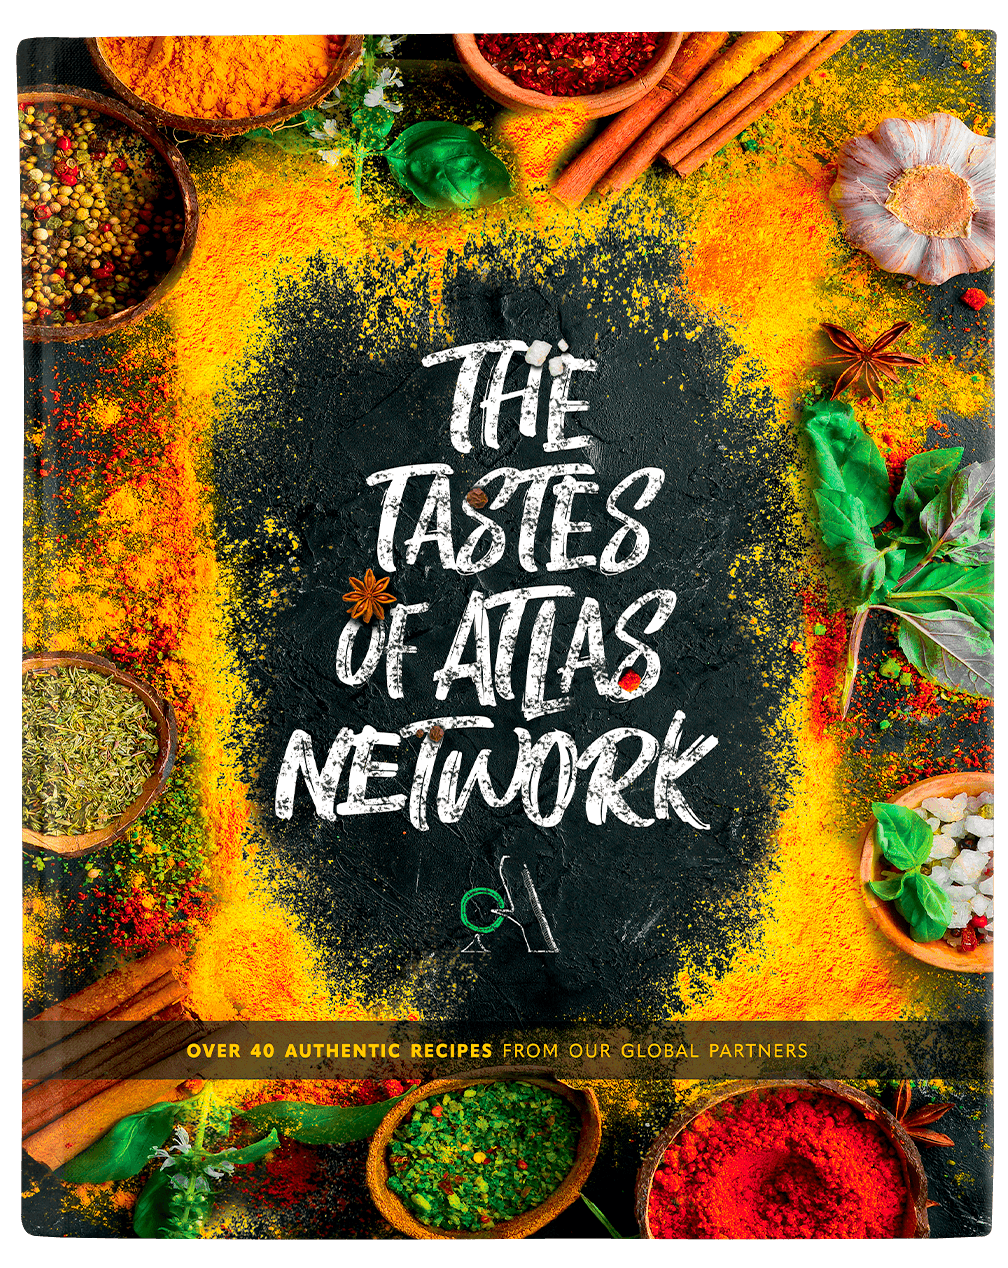 Atlas Network Cookbook cover image